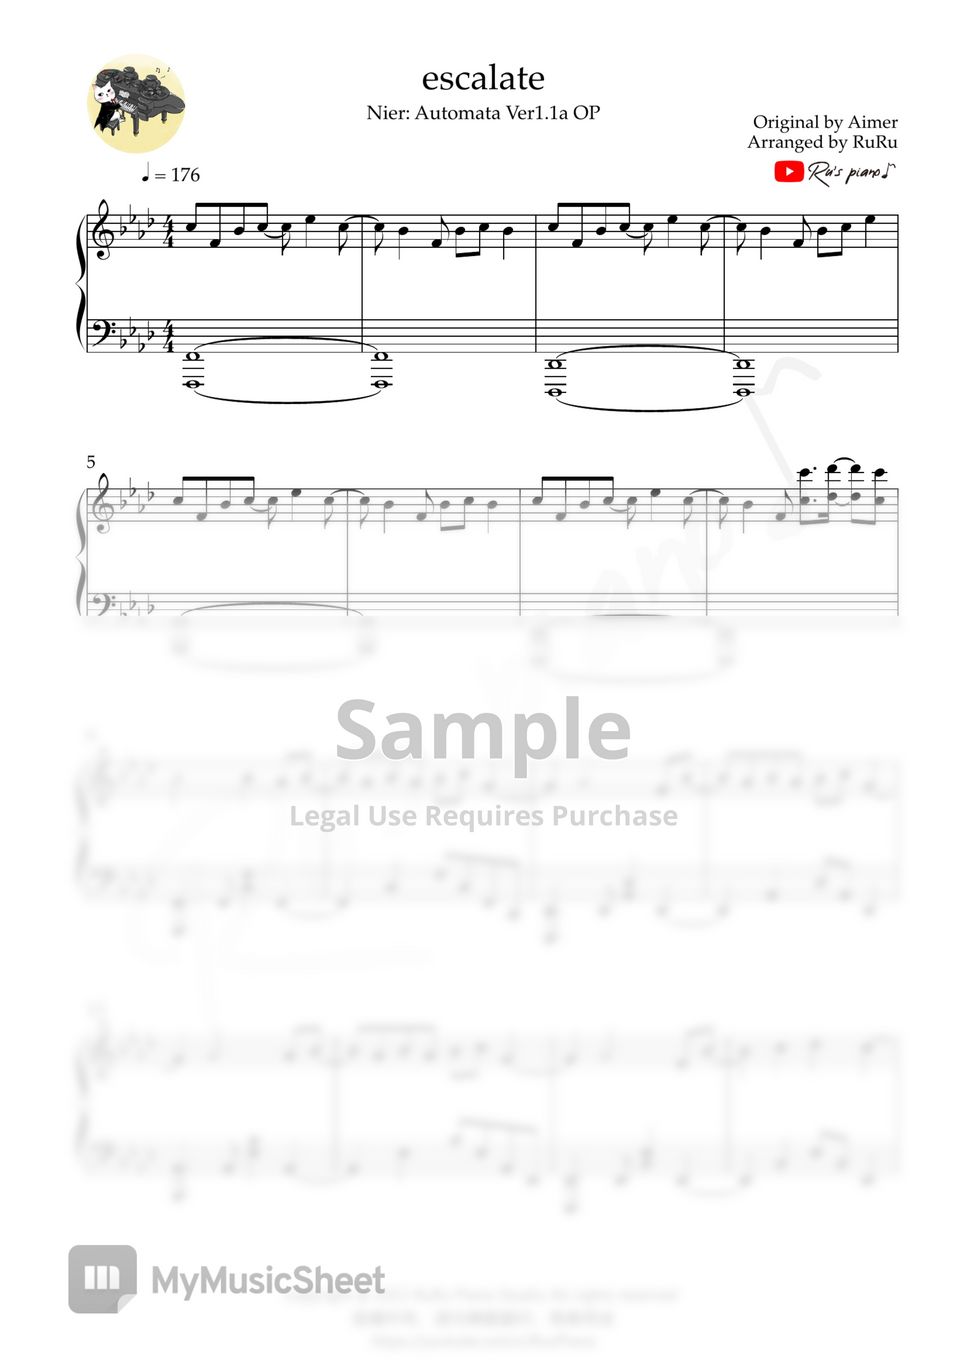 Nier: Automata Ver1.1a OP - escalate by Ru's Piano